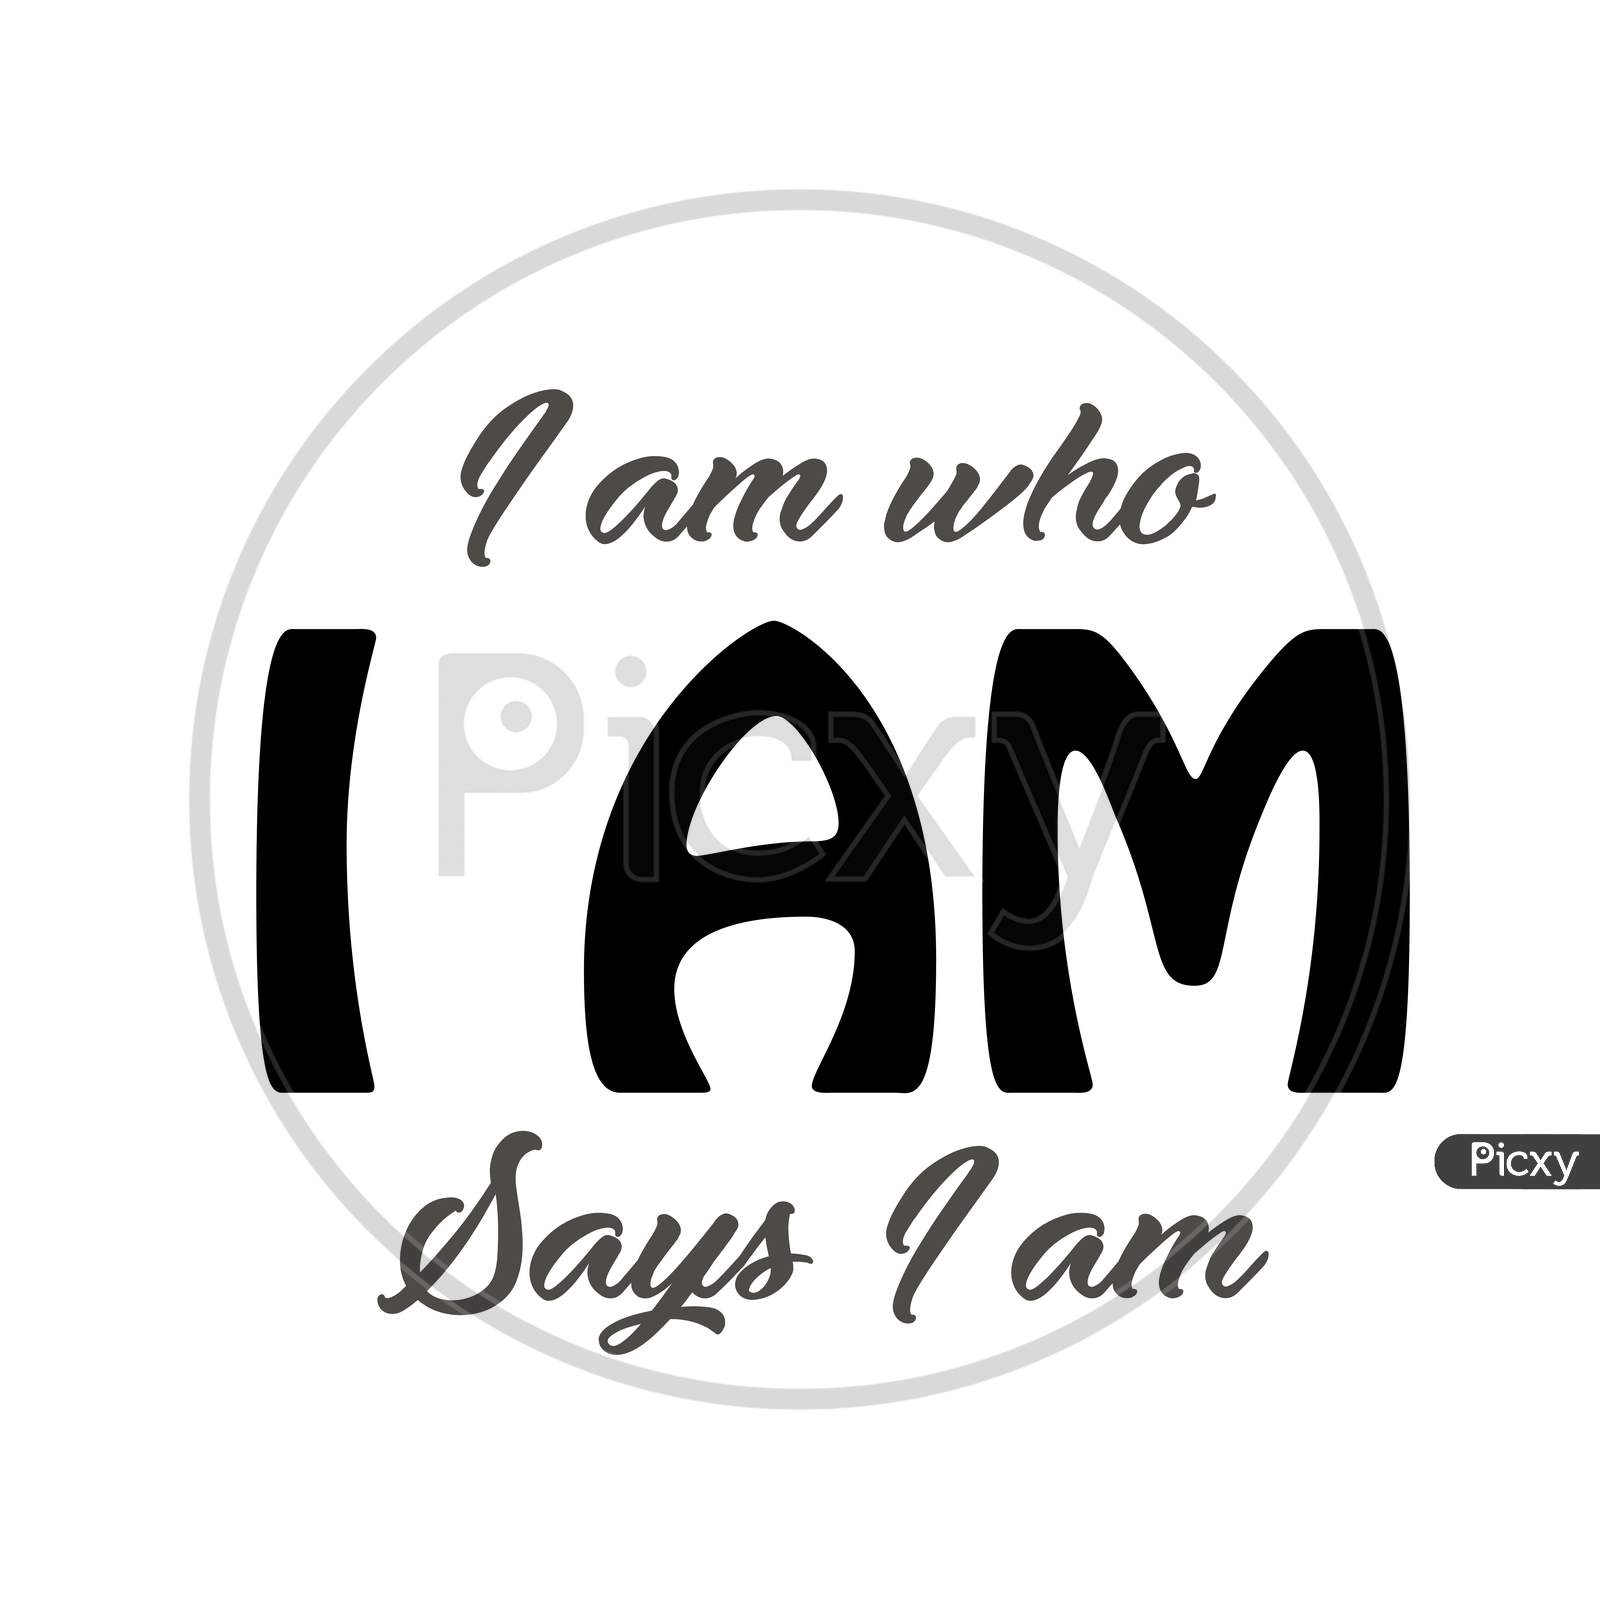 Biblical Phrase - I am who I am says I am